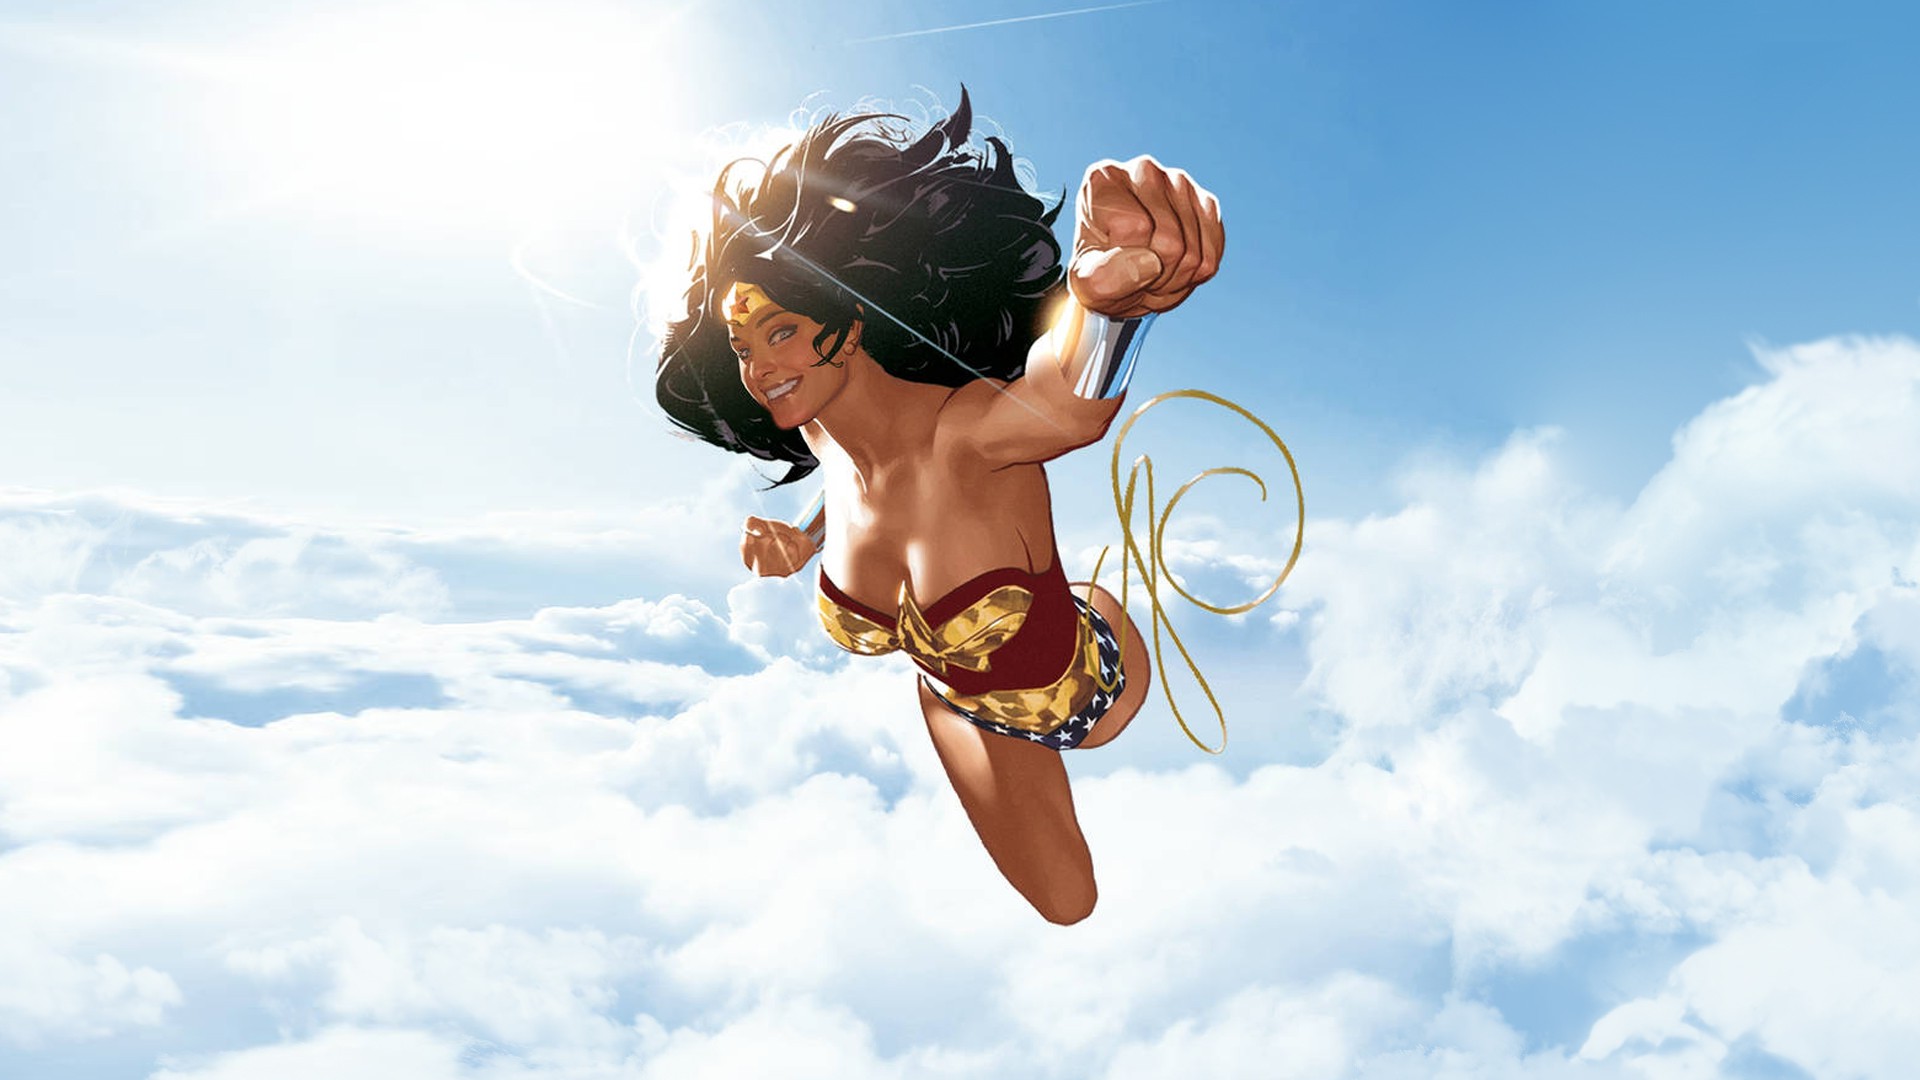 Wonder Woman Superhero Artwork Wallpapers